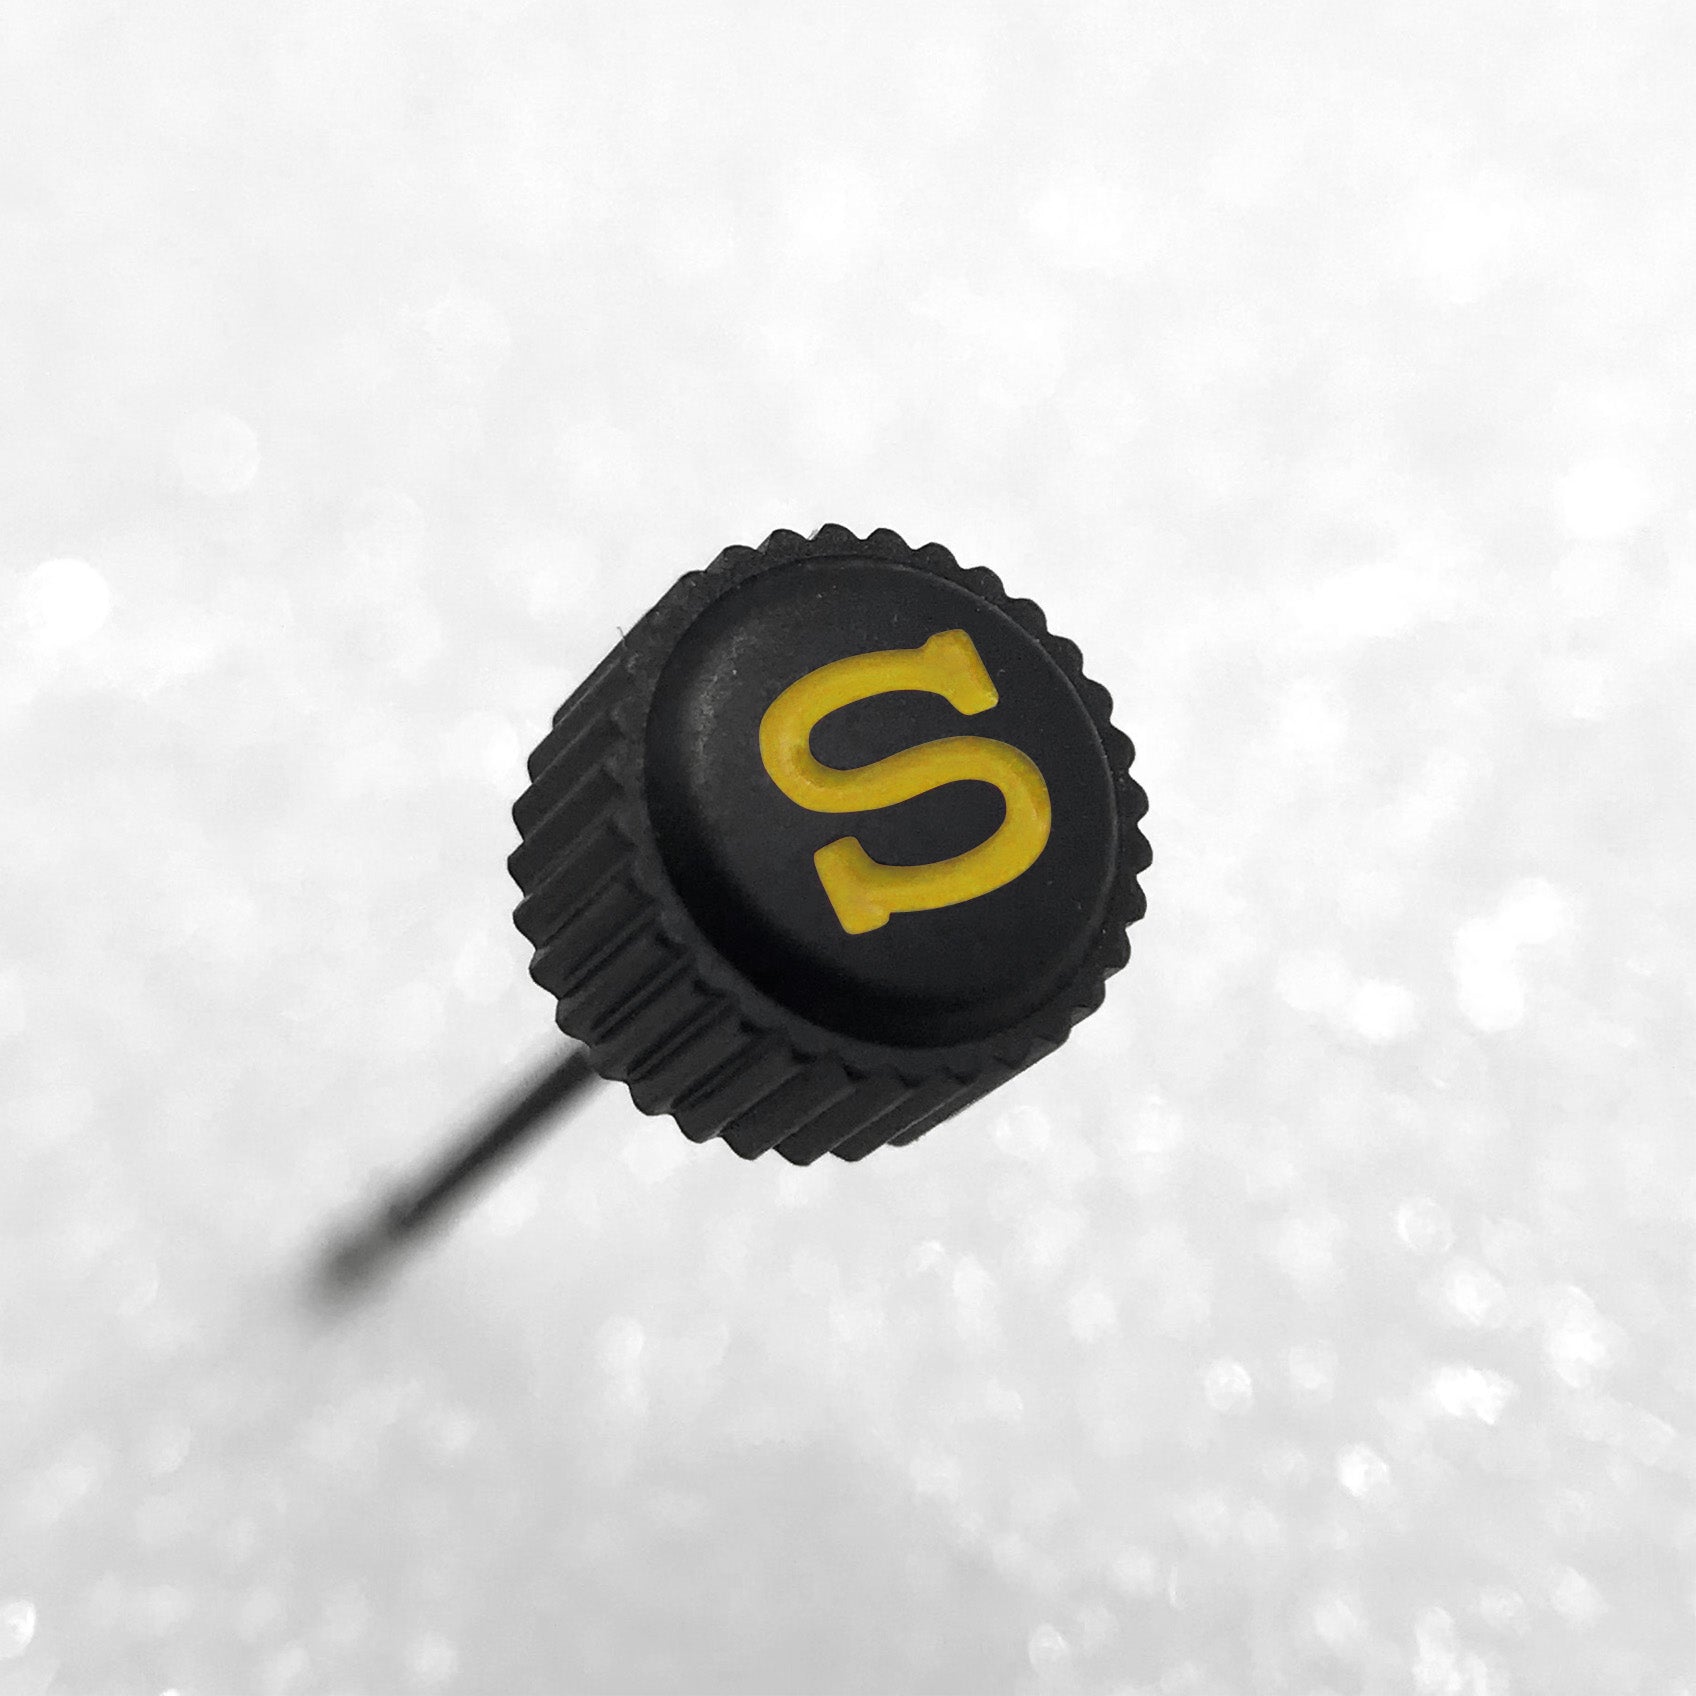 Crown - SKX007 - Bead Blasted PVD Black - Yellow "S"